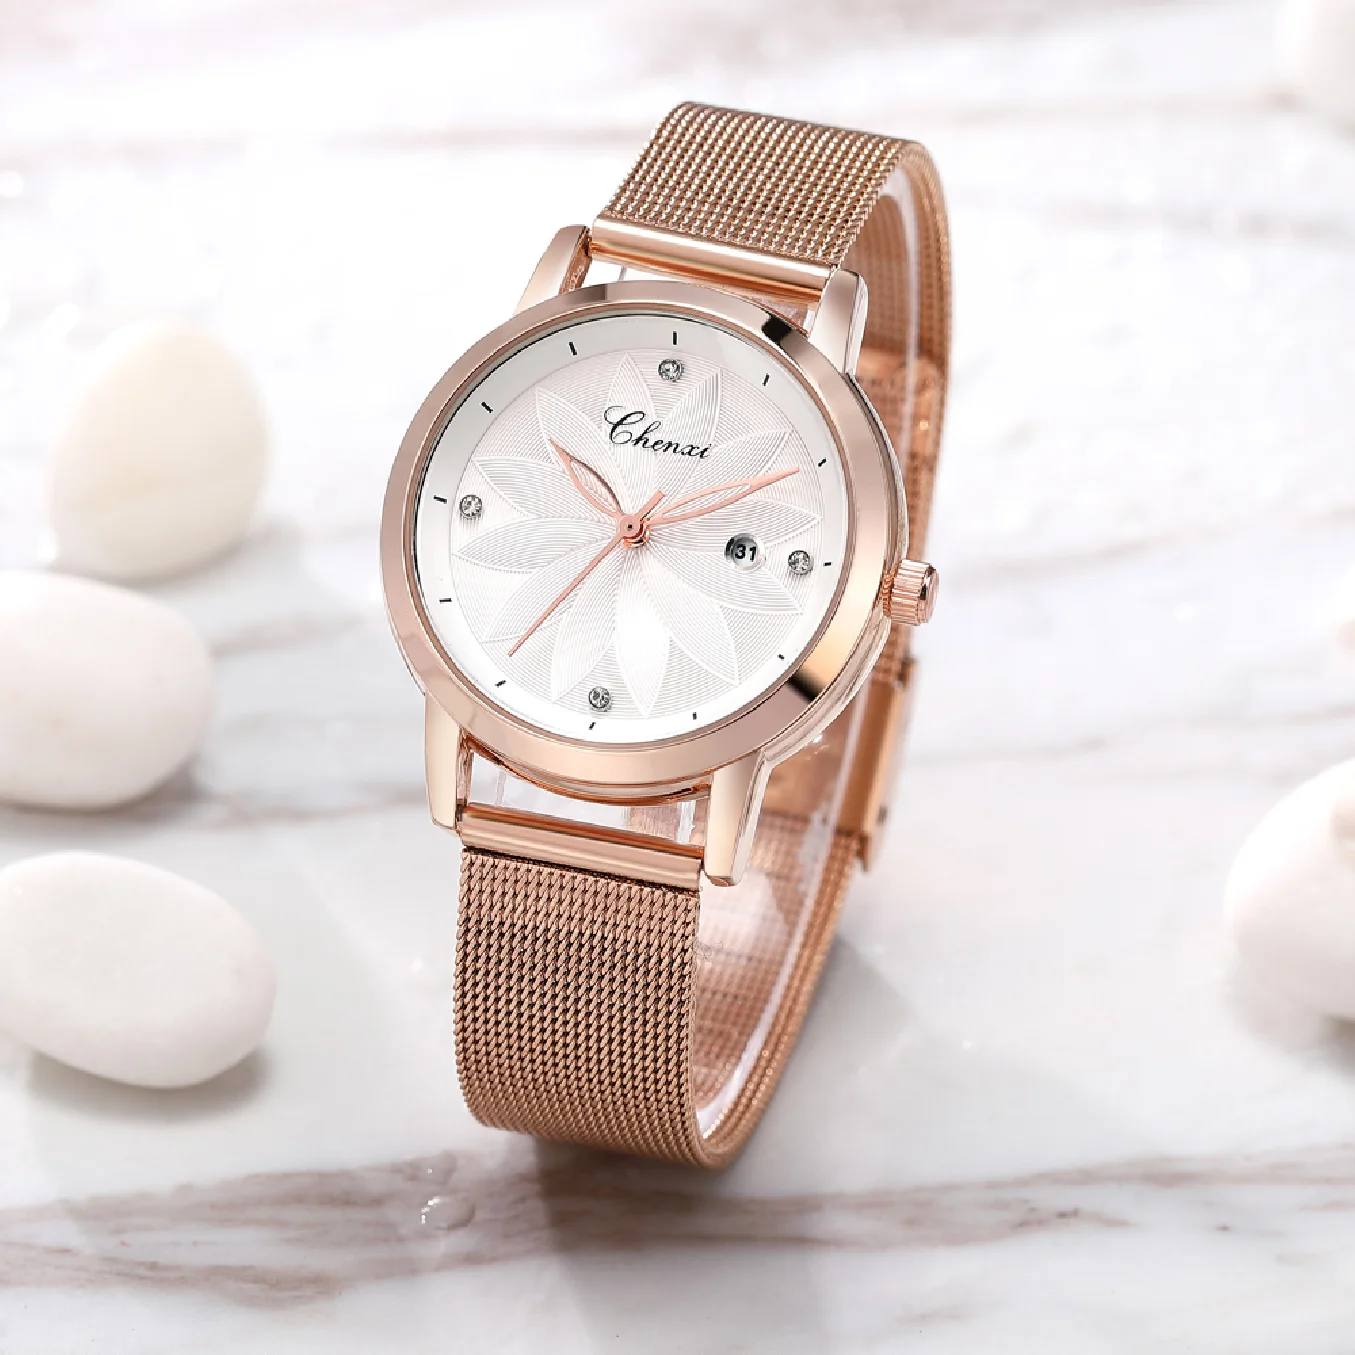 

CHENXI 32mm Rose Gold Ladies Watches Creative Design Women Watches Relogio Feminino Quartz Movement Analog Ladies Wristwatches